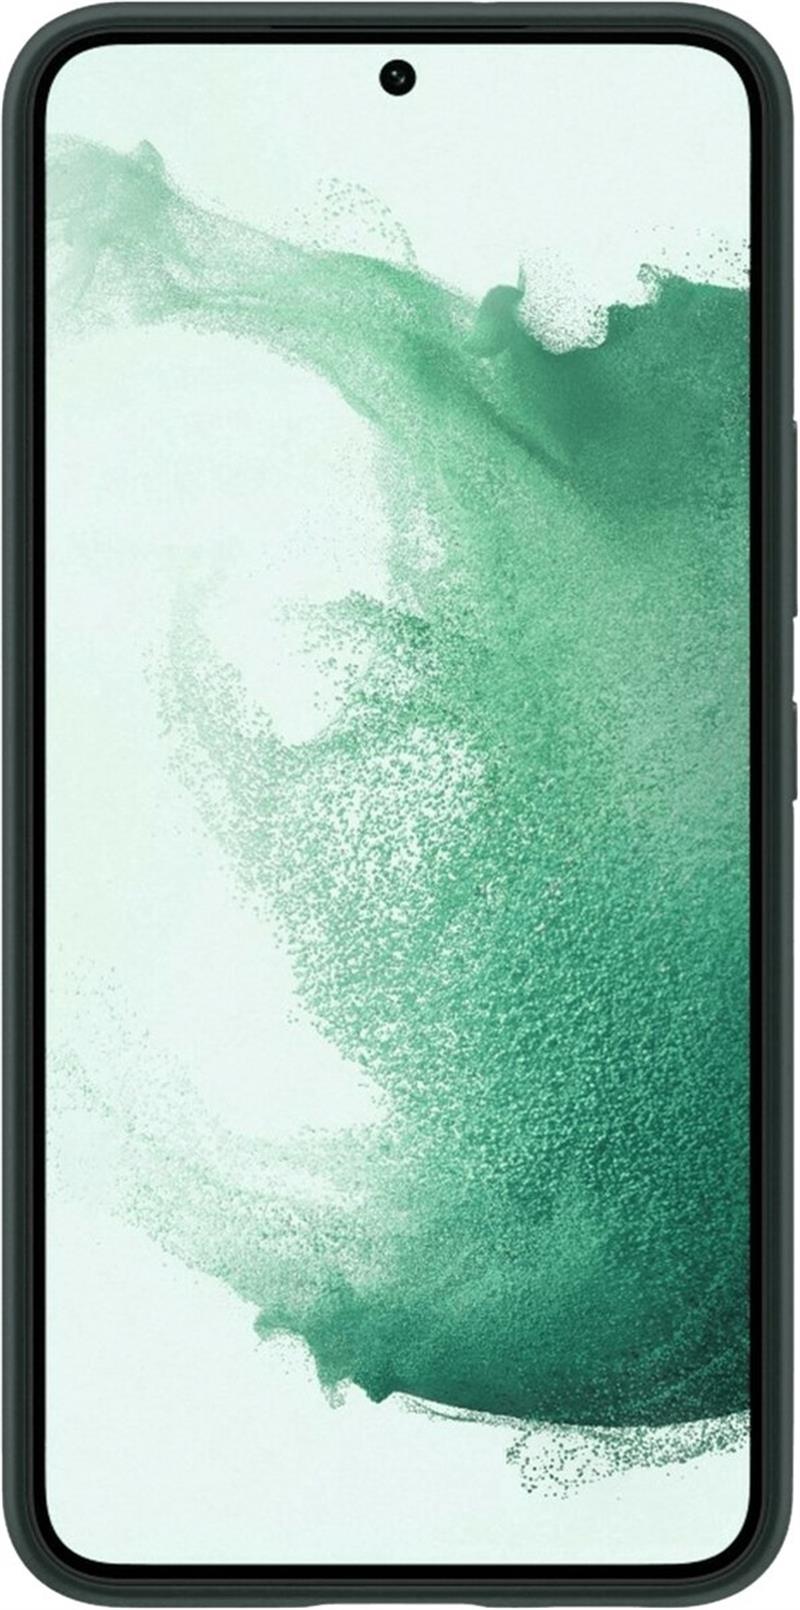  Samsung Silicone Cover Galaxy S22 5G Dark Green